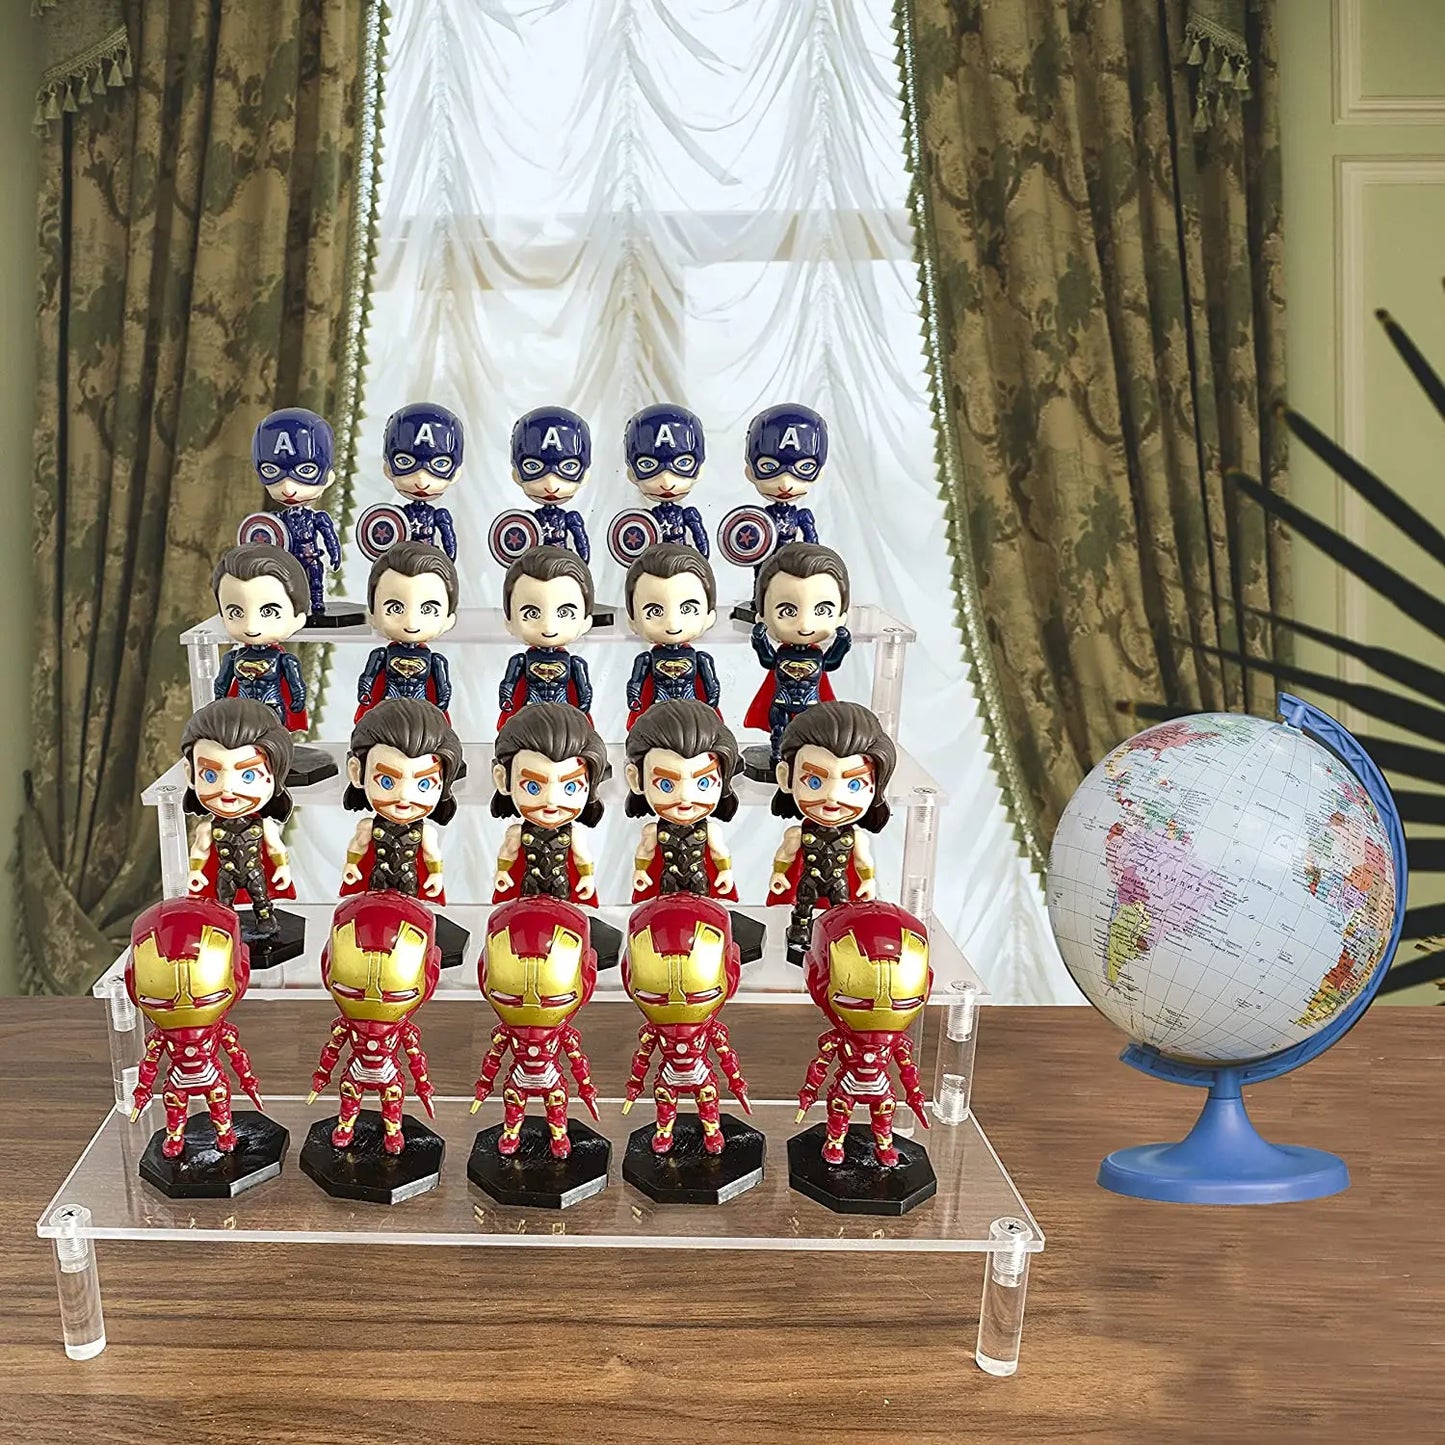 1-5 Tier Acrylic Clear Display Stand for Perfume, Cupcake, Doll, Amiibo Funko POP Figures